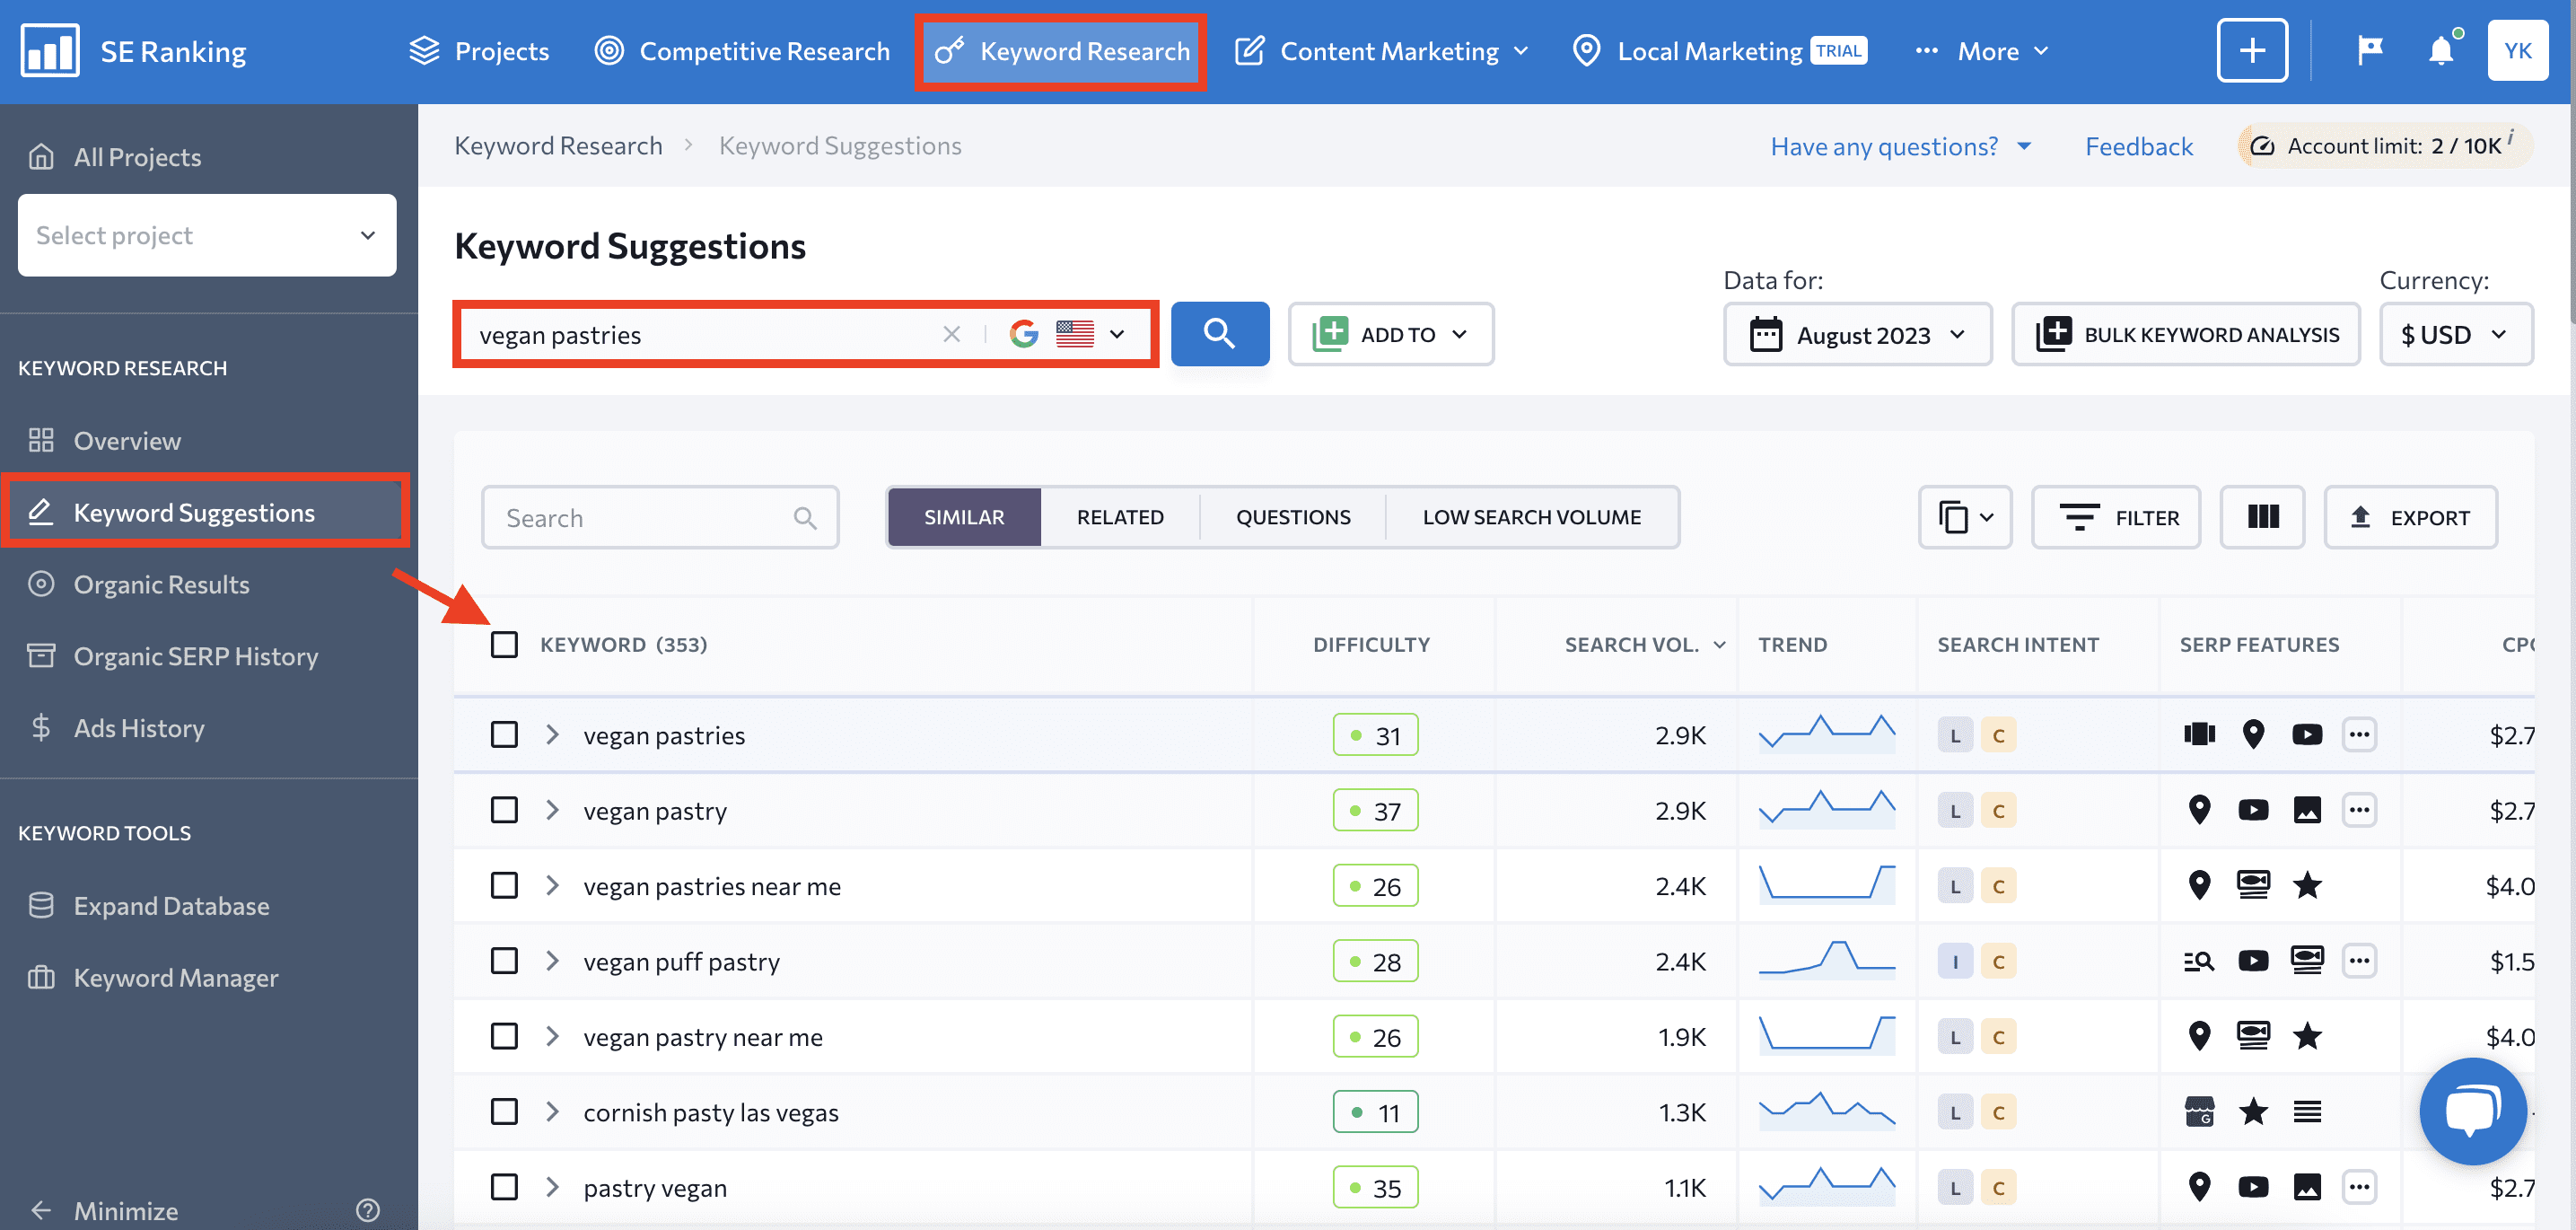 SE Ranking's Keyword Suggestion Tool